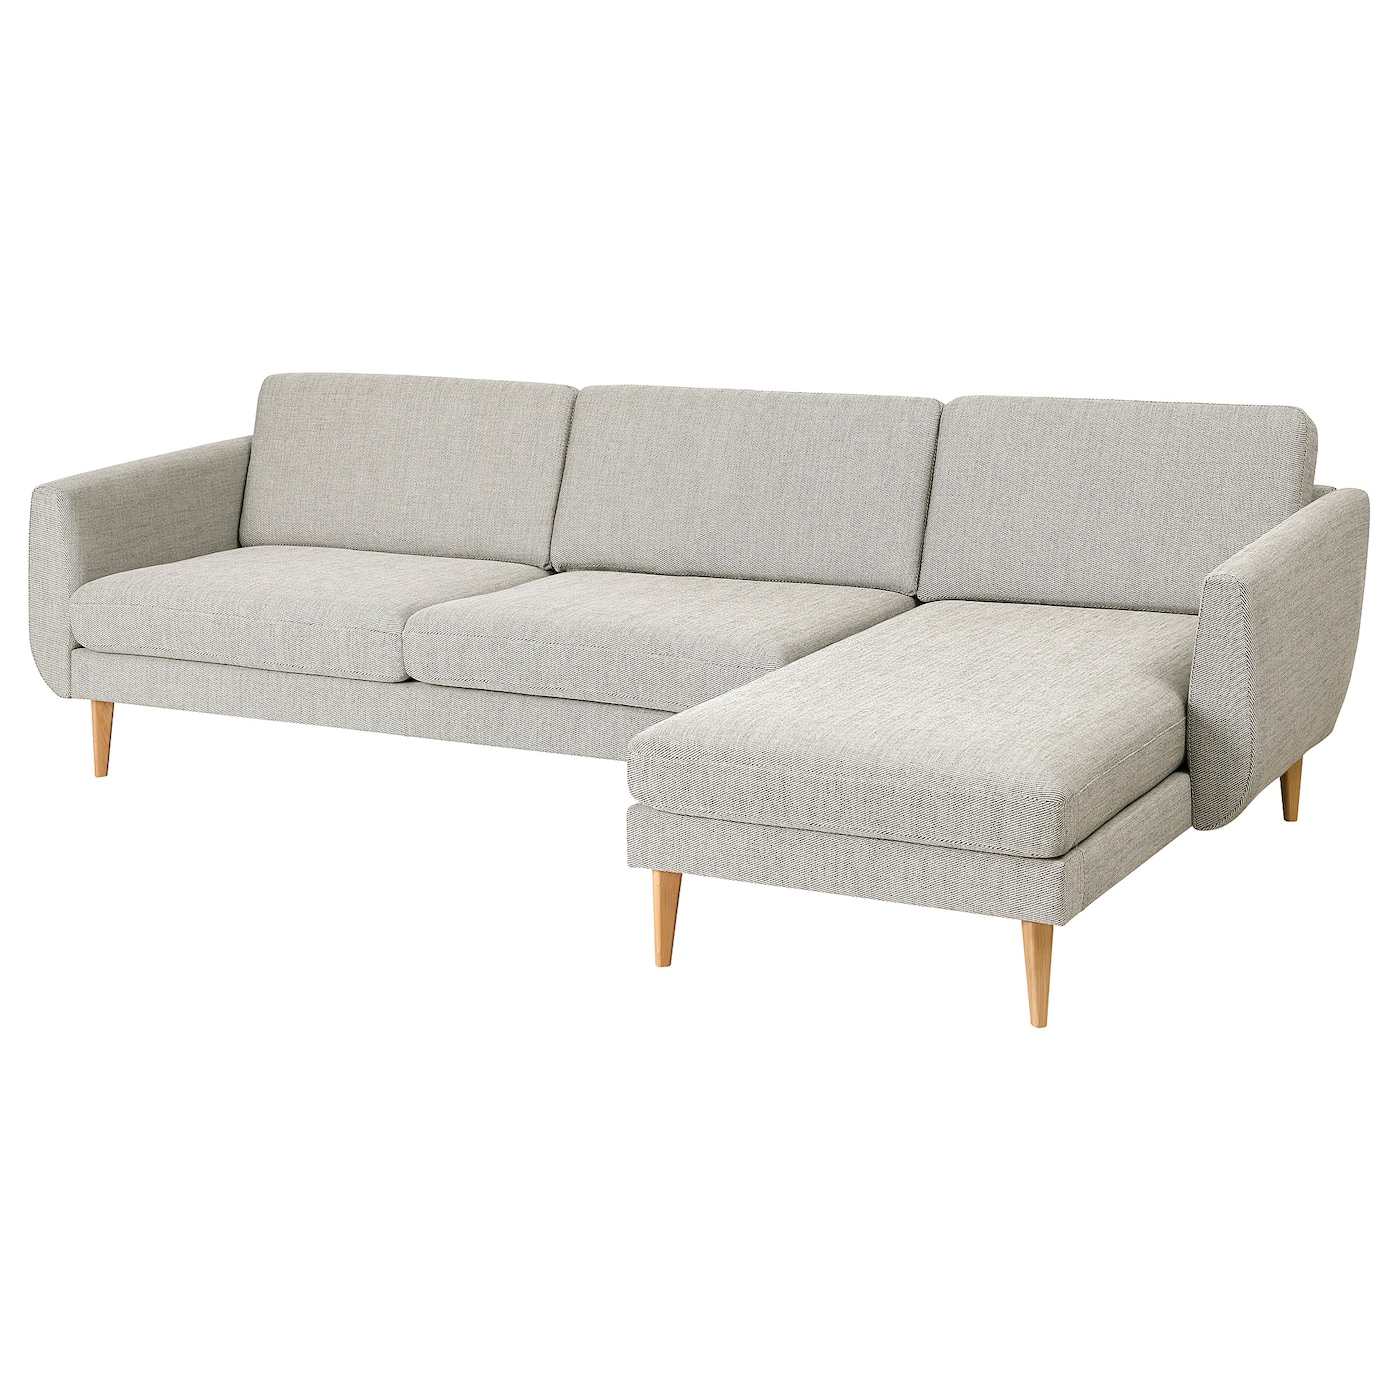 СМЕДСТОРП 4-местный диван + диван, Виарп/беж/коричневый дуб SMEDSTORP IKEA диван гранд кволити 2 4201 флинт дуб сонома к з беж